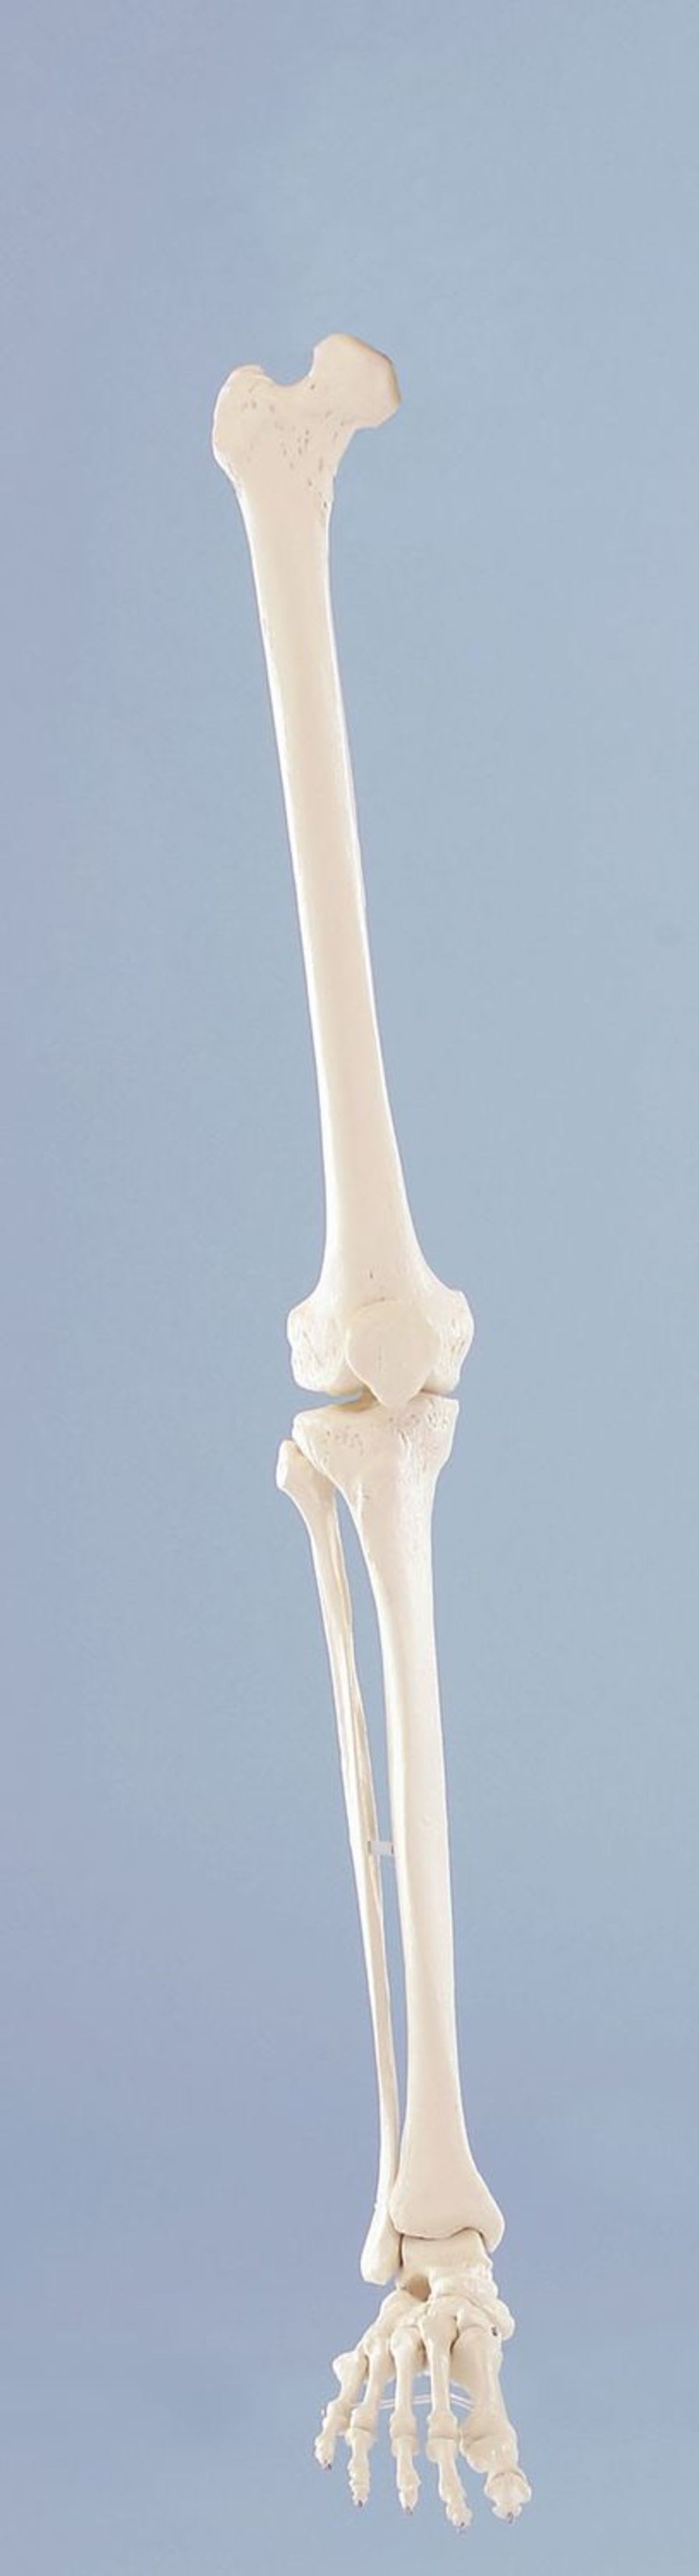 Skeleton anatomical model 6062 Erler-Zimmer Anatomiemodelle